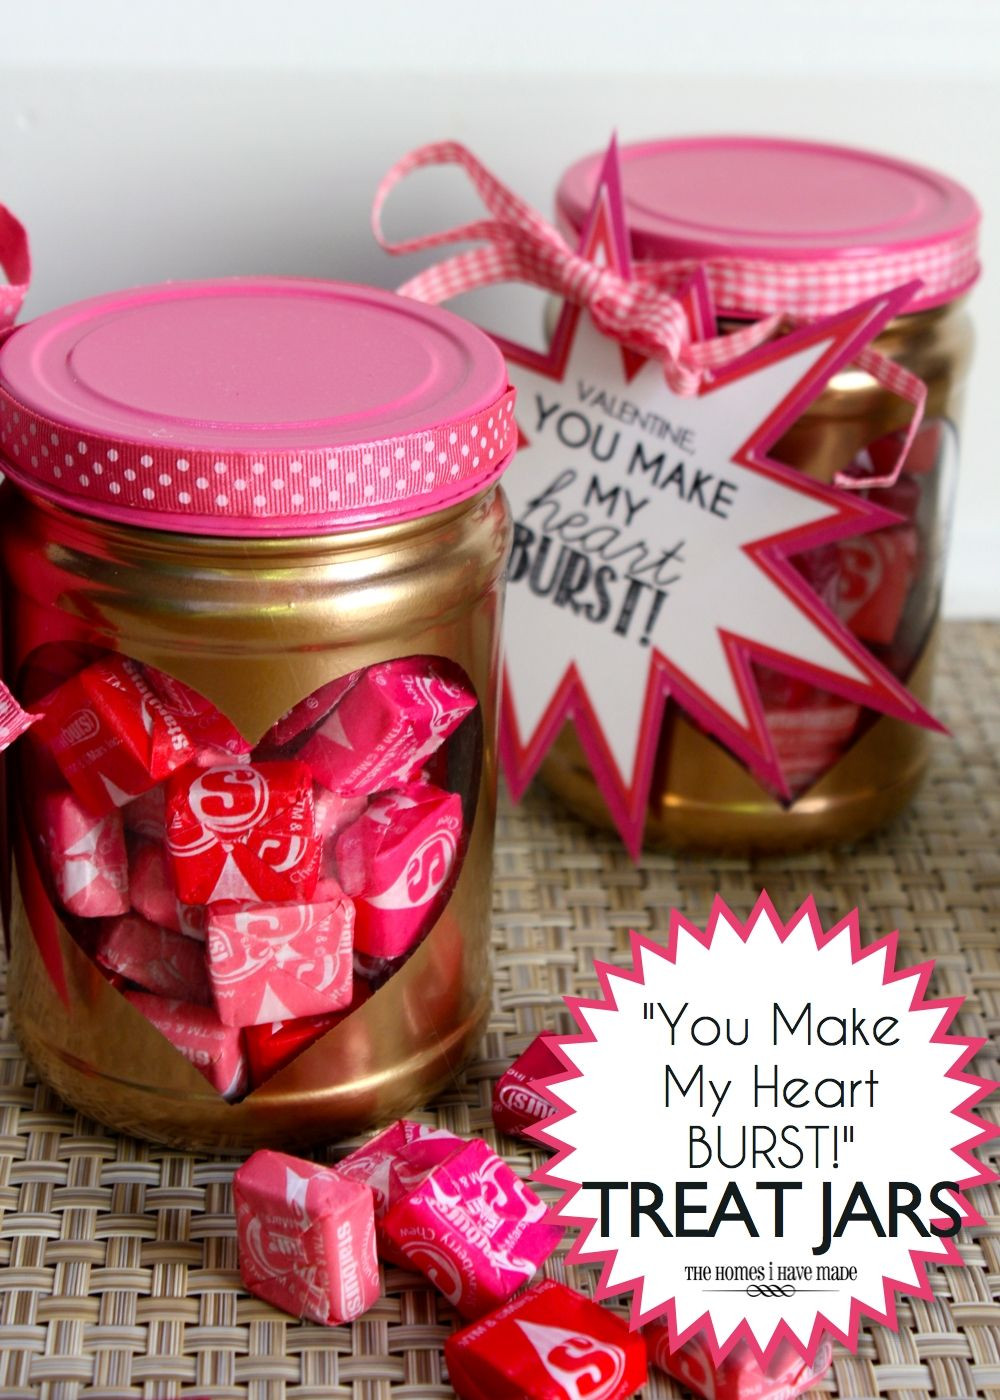 Will You Be My Valentine Gift Ideas
 "You Make My Heart Burst " Valentine Treat Jars